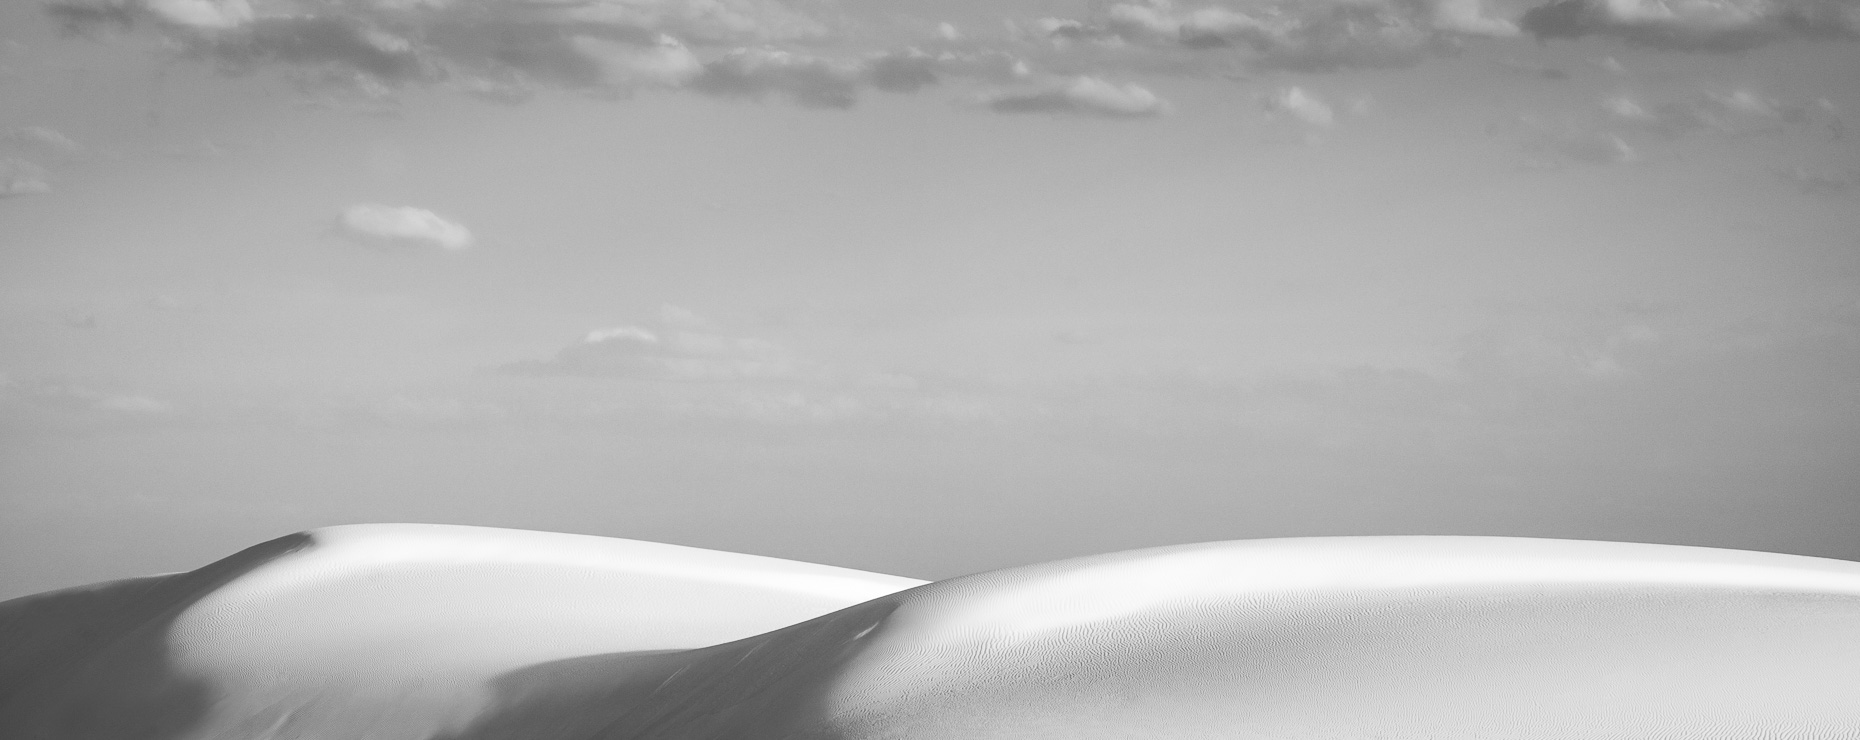 White Sands 5